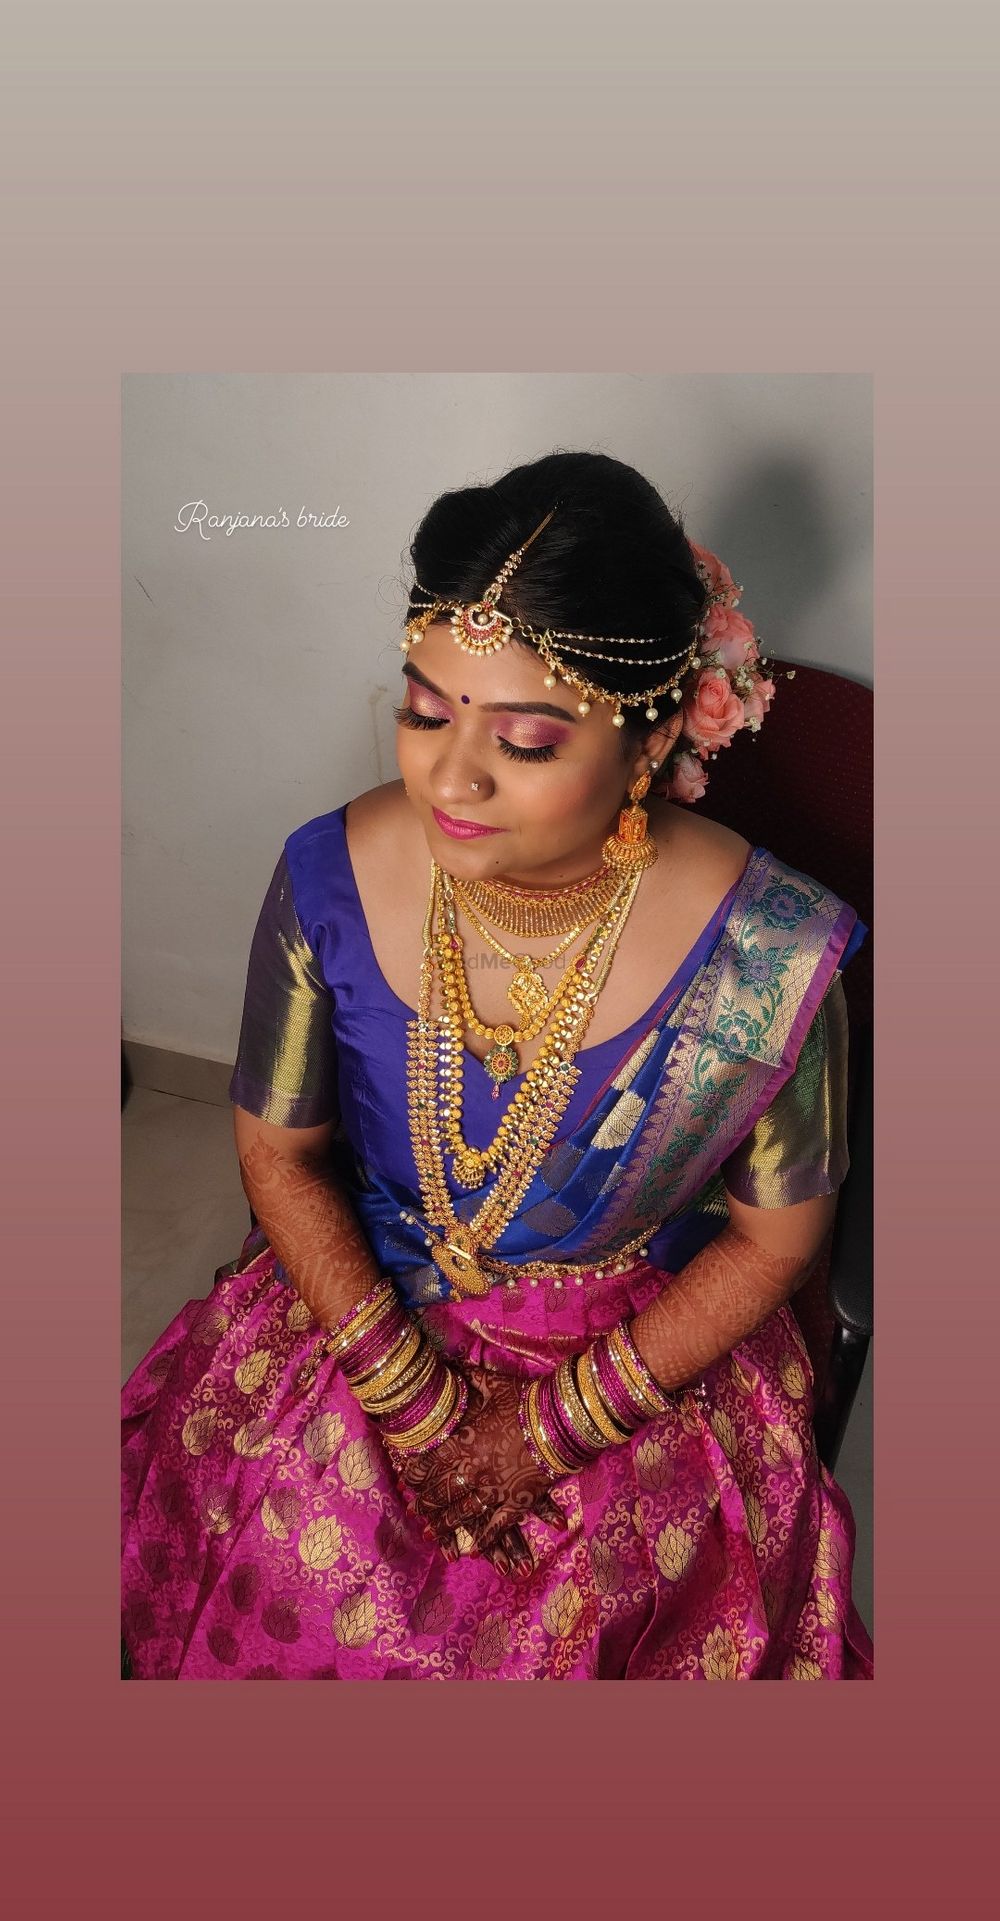 Photo From preethi's wedding - By Makeovers by Ranjana Venkatesh